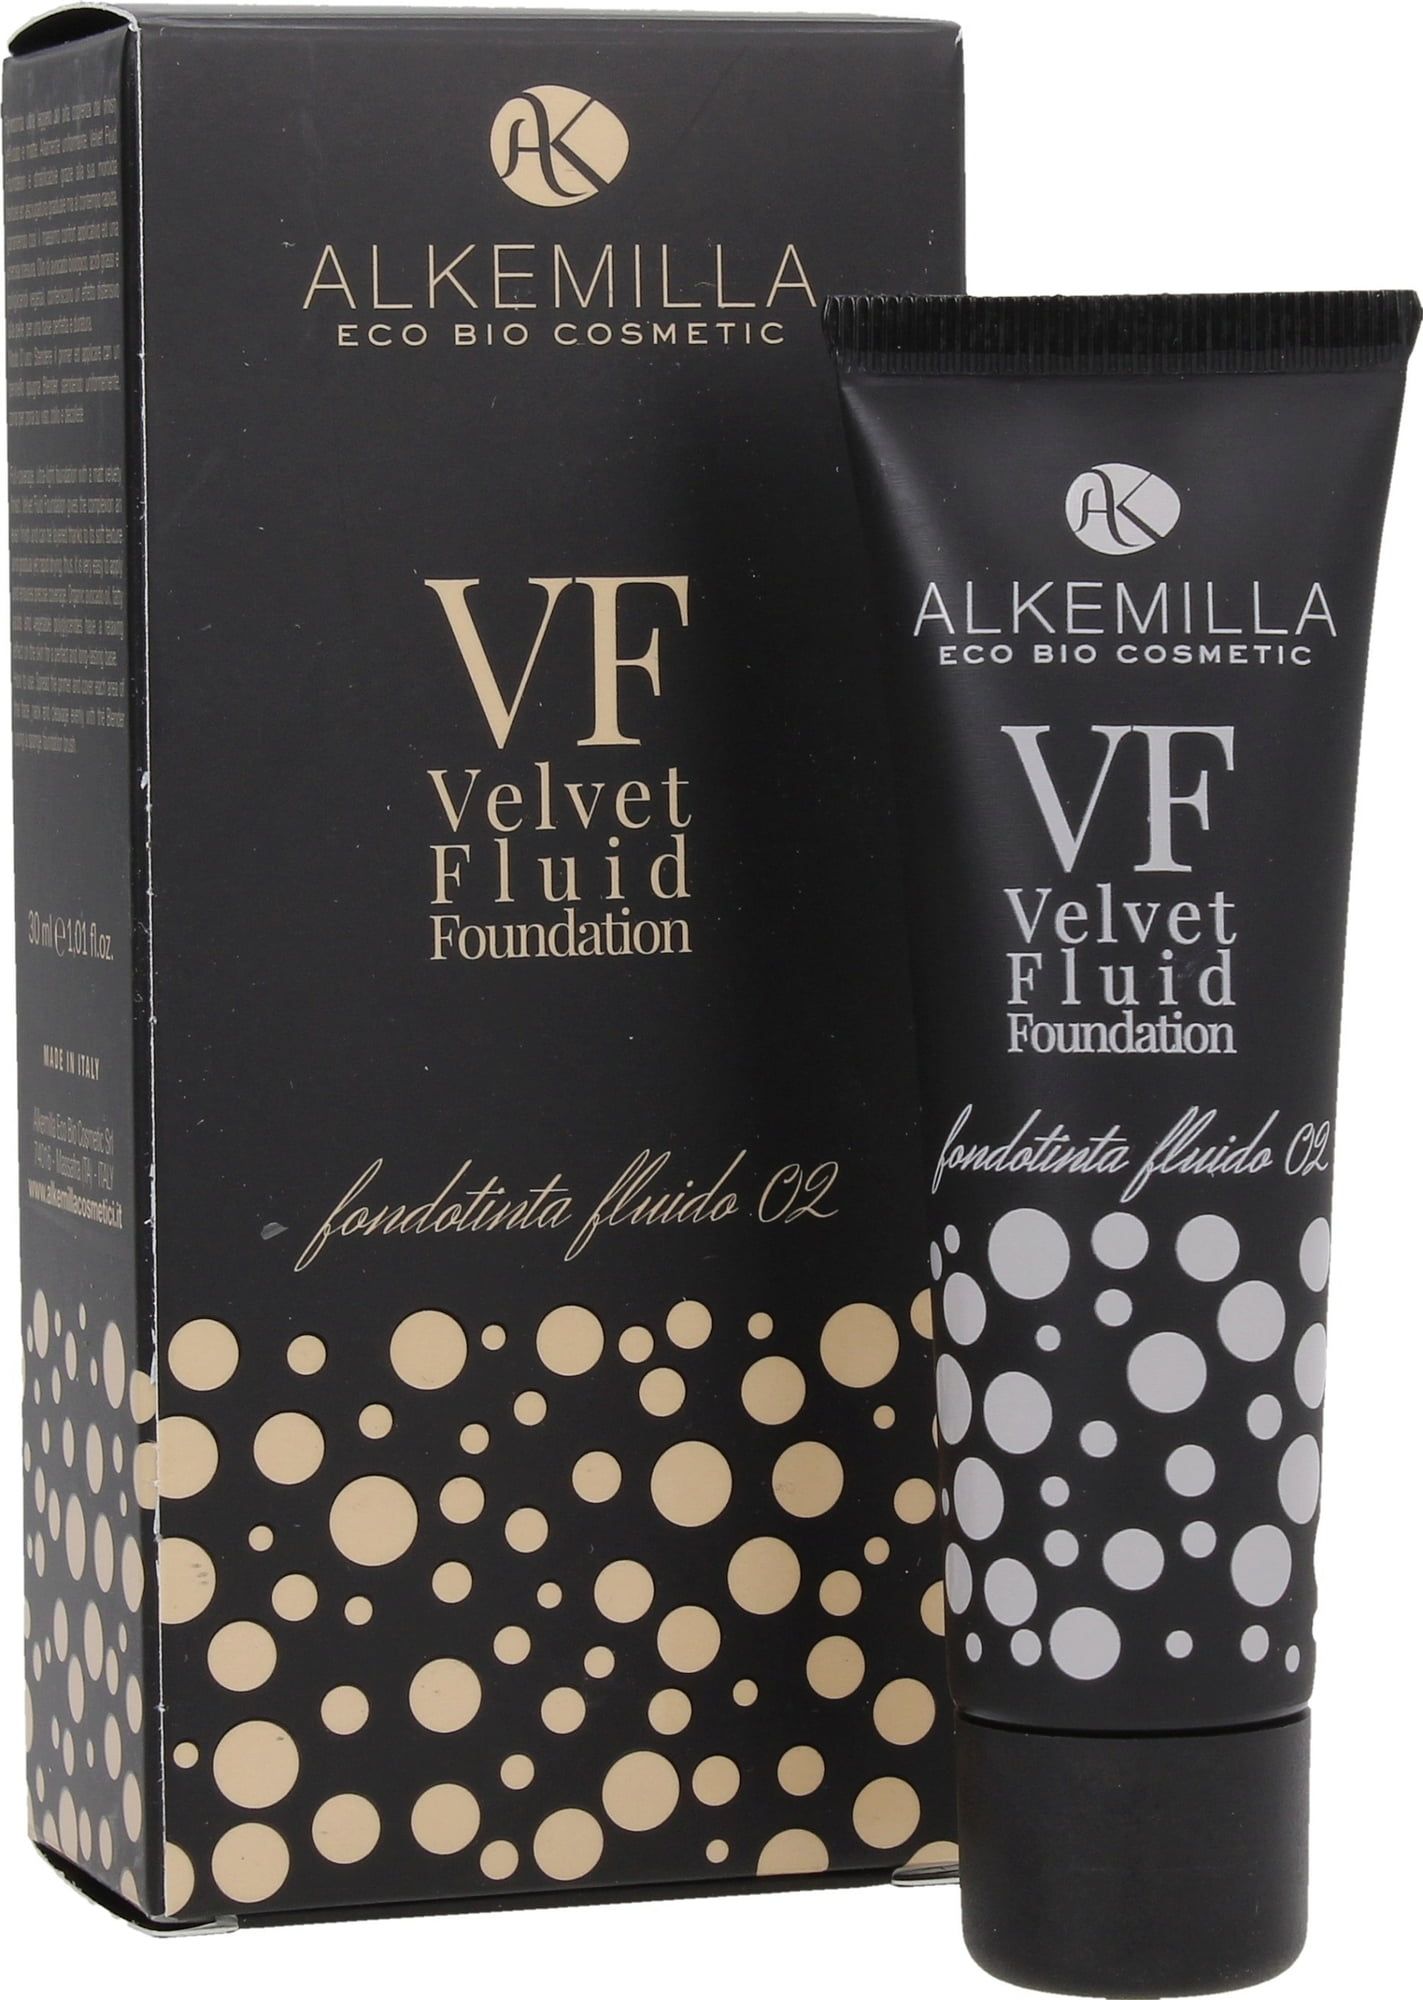 Alkemilla Eco Bio Cosmetic Velvet Fluid Foundation - 02